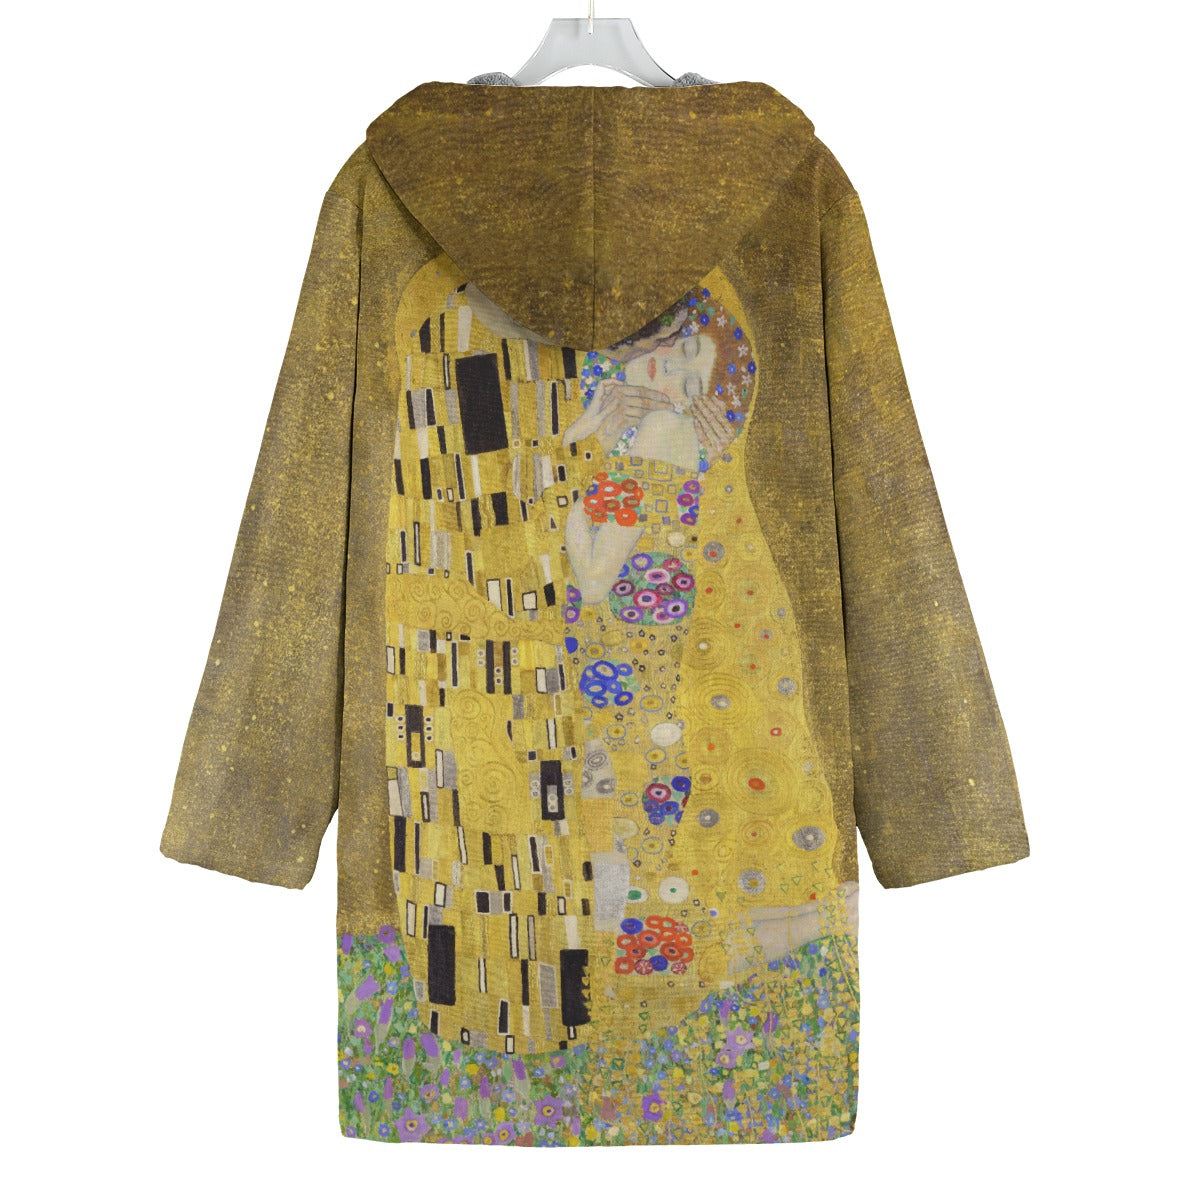 Artistic Outerwear Inspired by Gustav Klimt